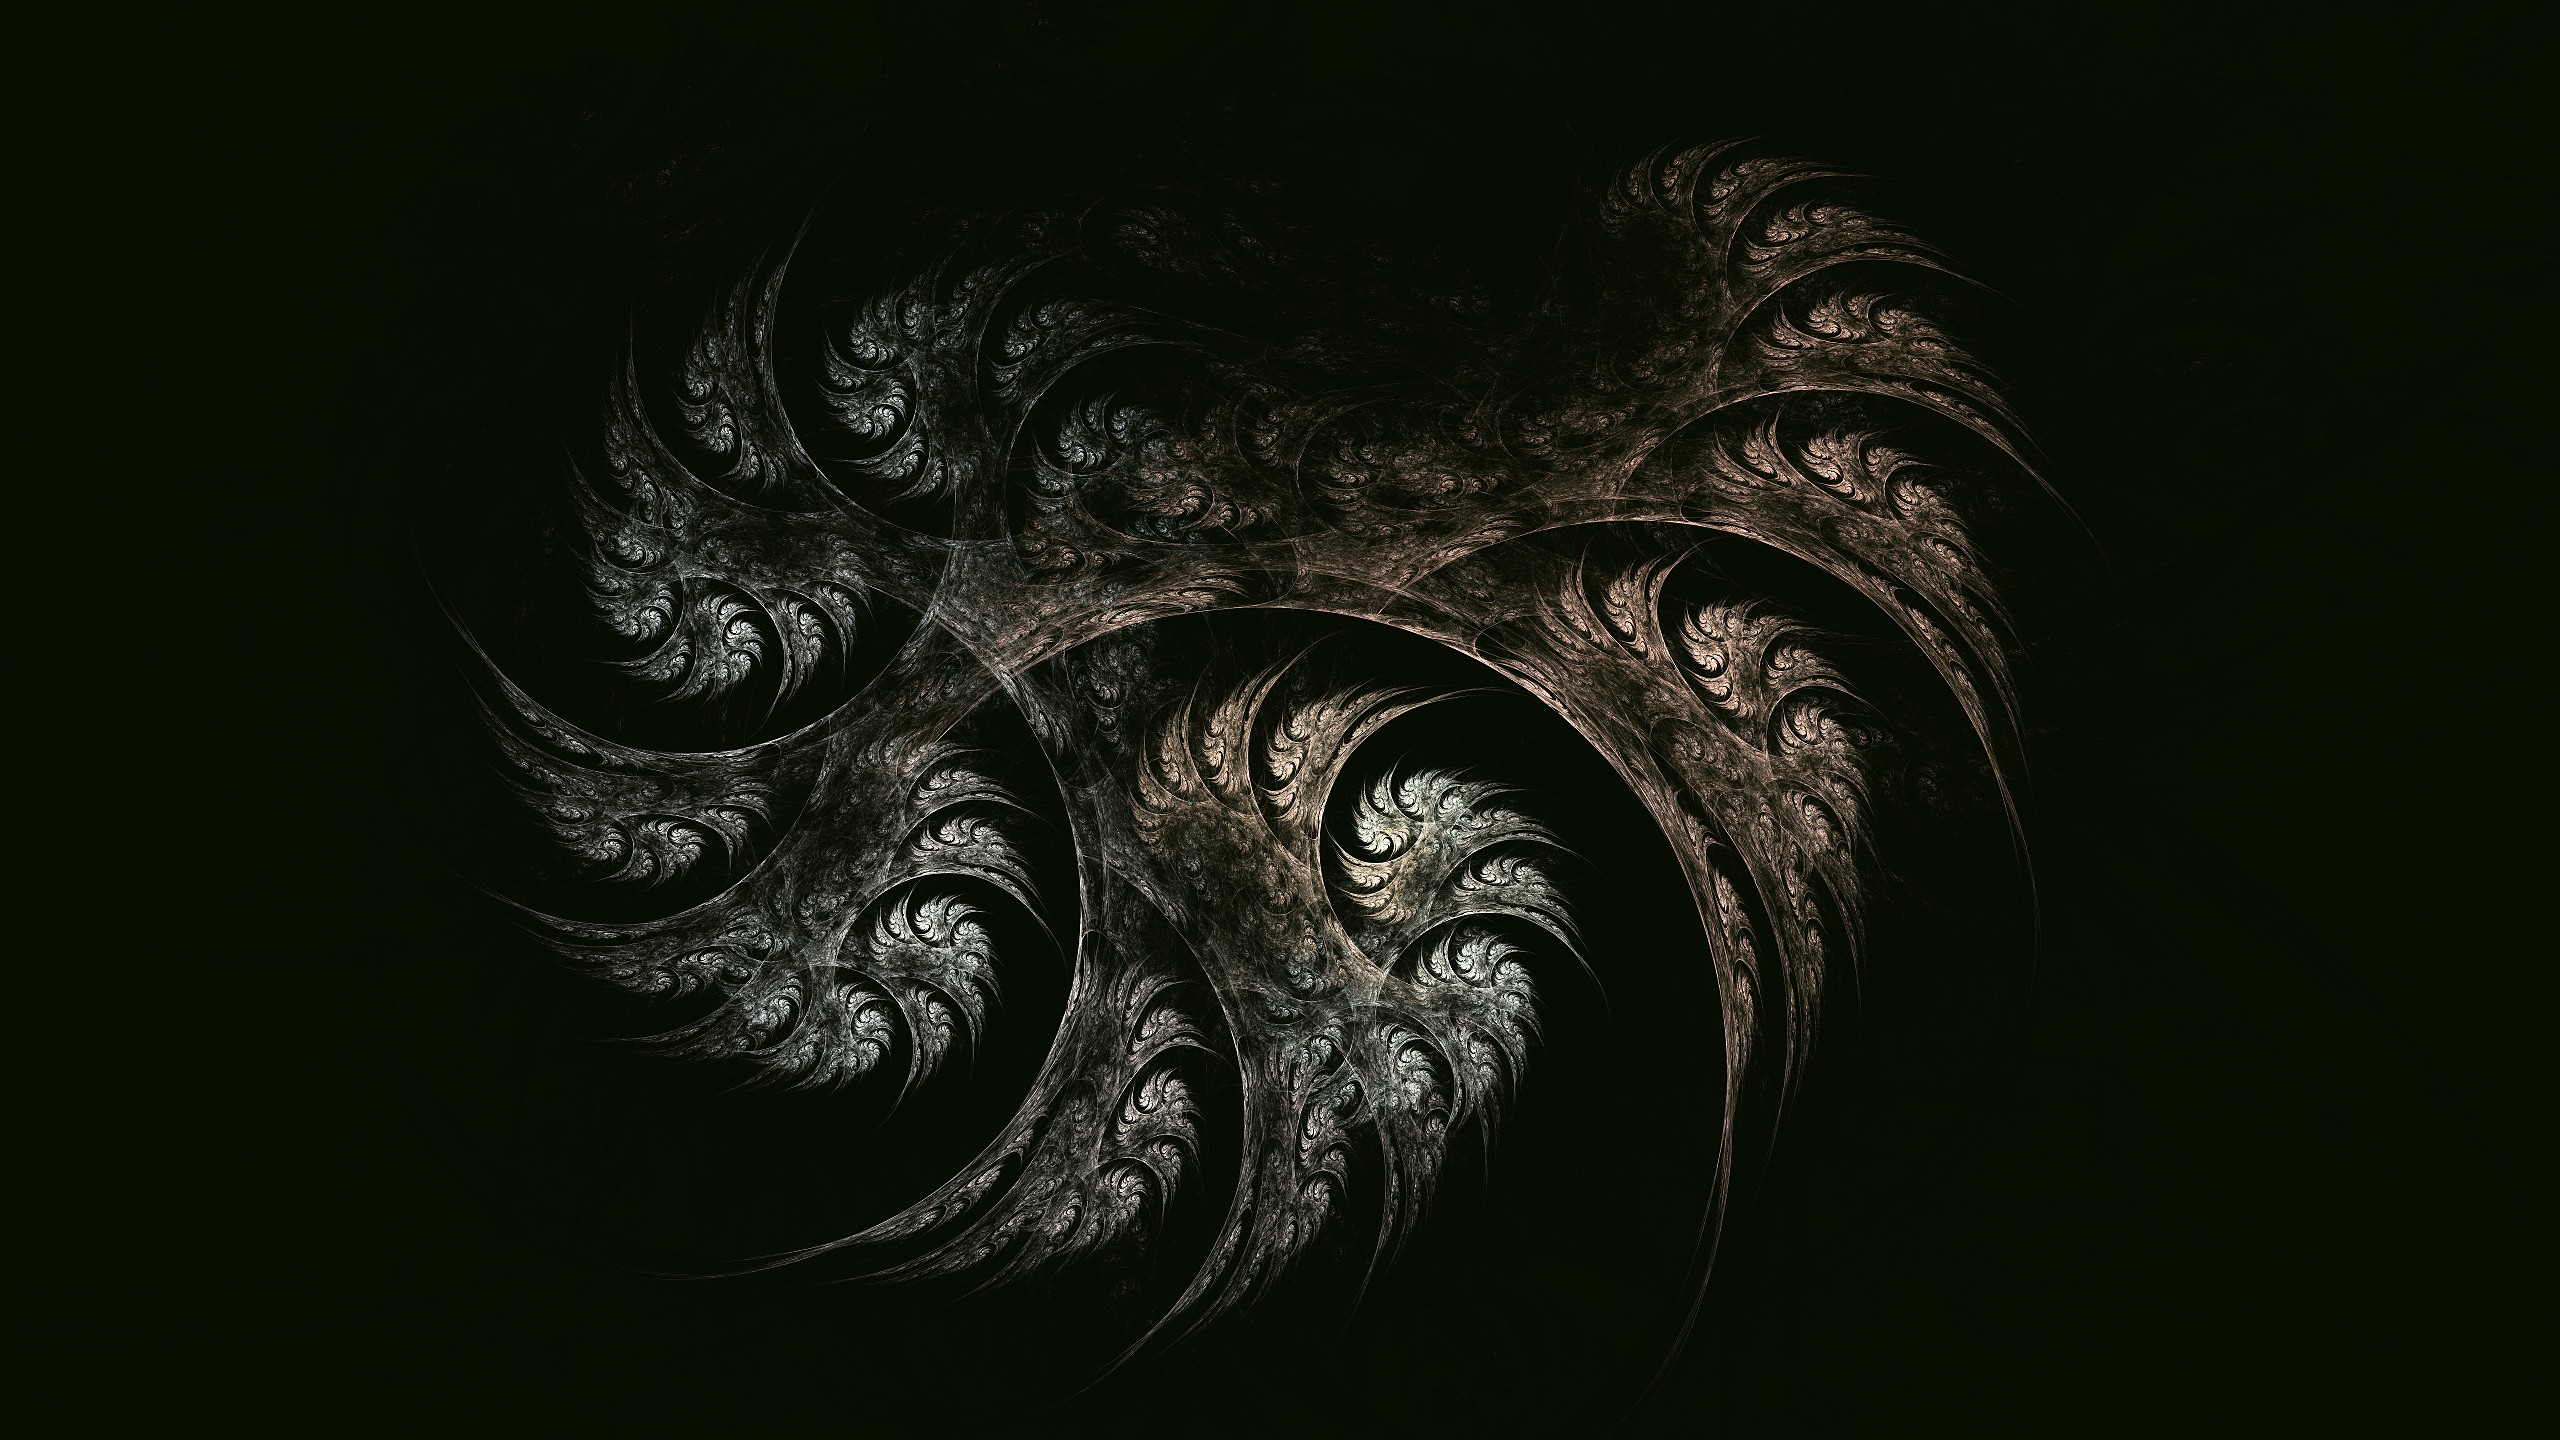 General 2560x1440 digital art abstract simple background fractal black background smoke